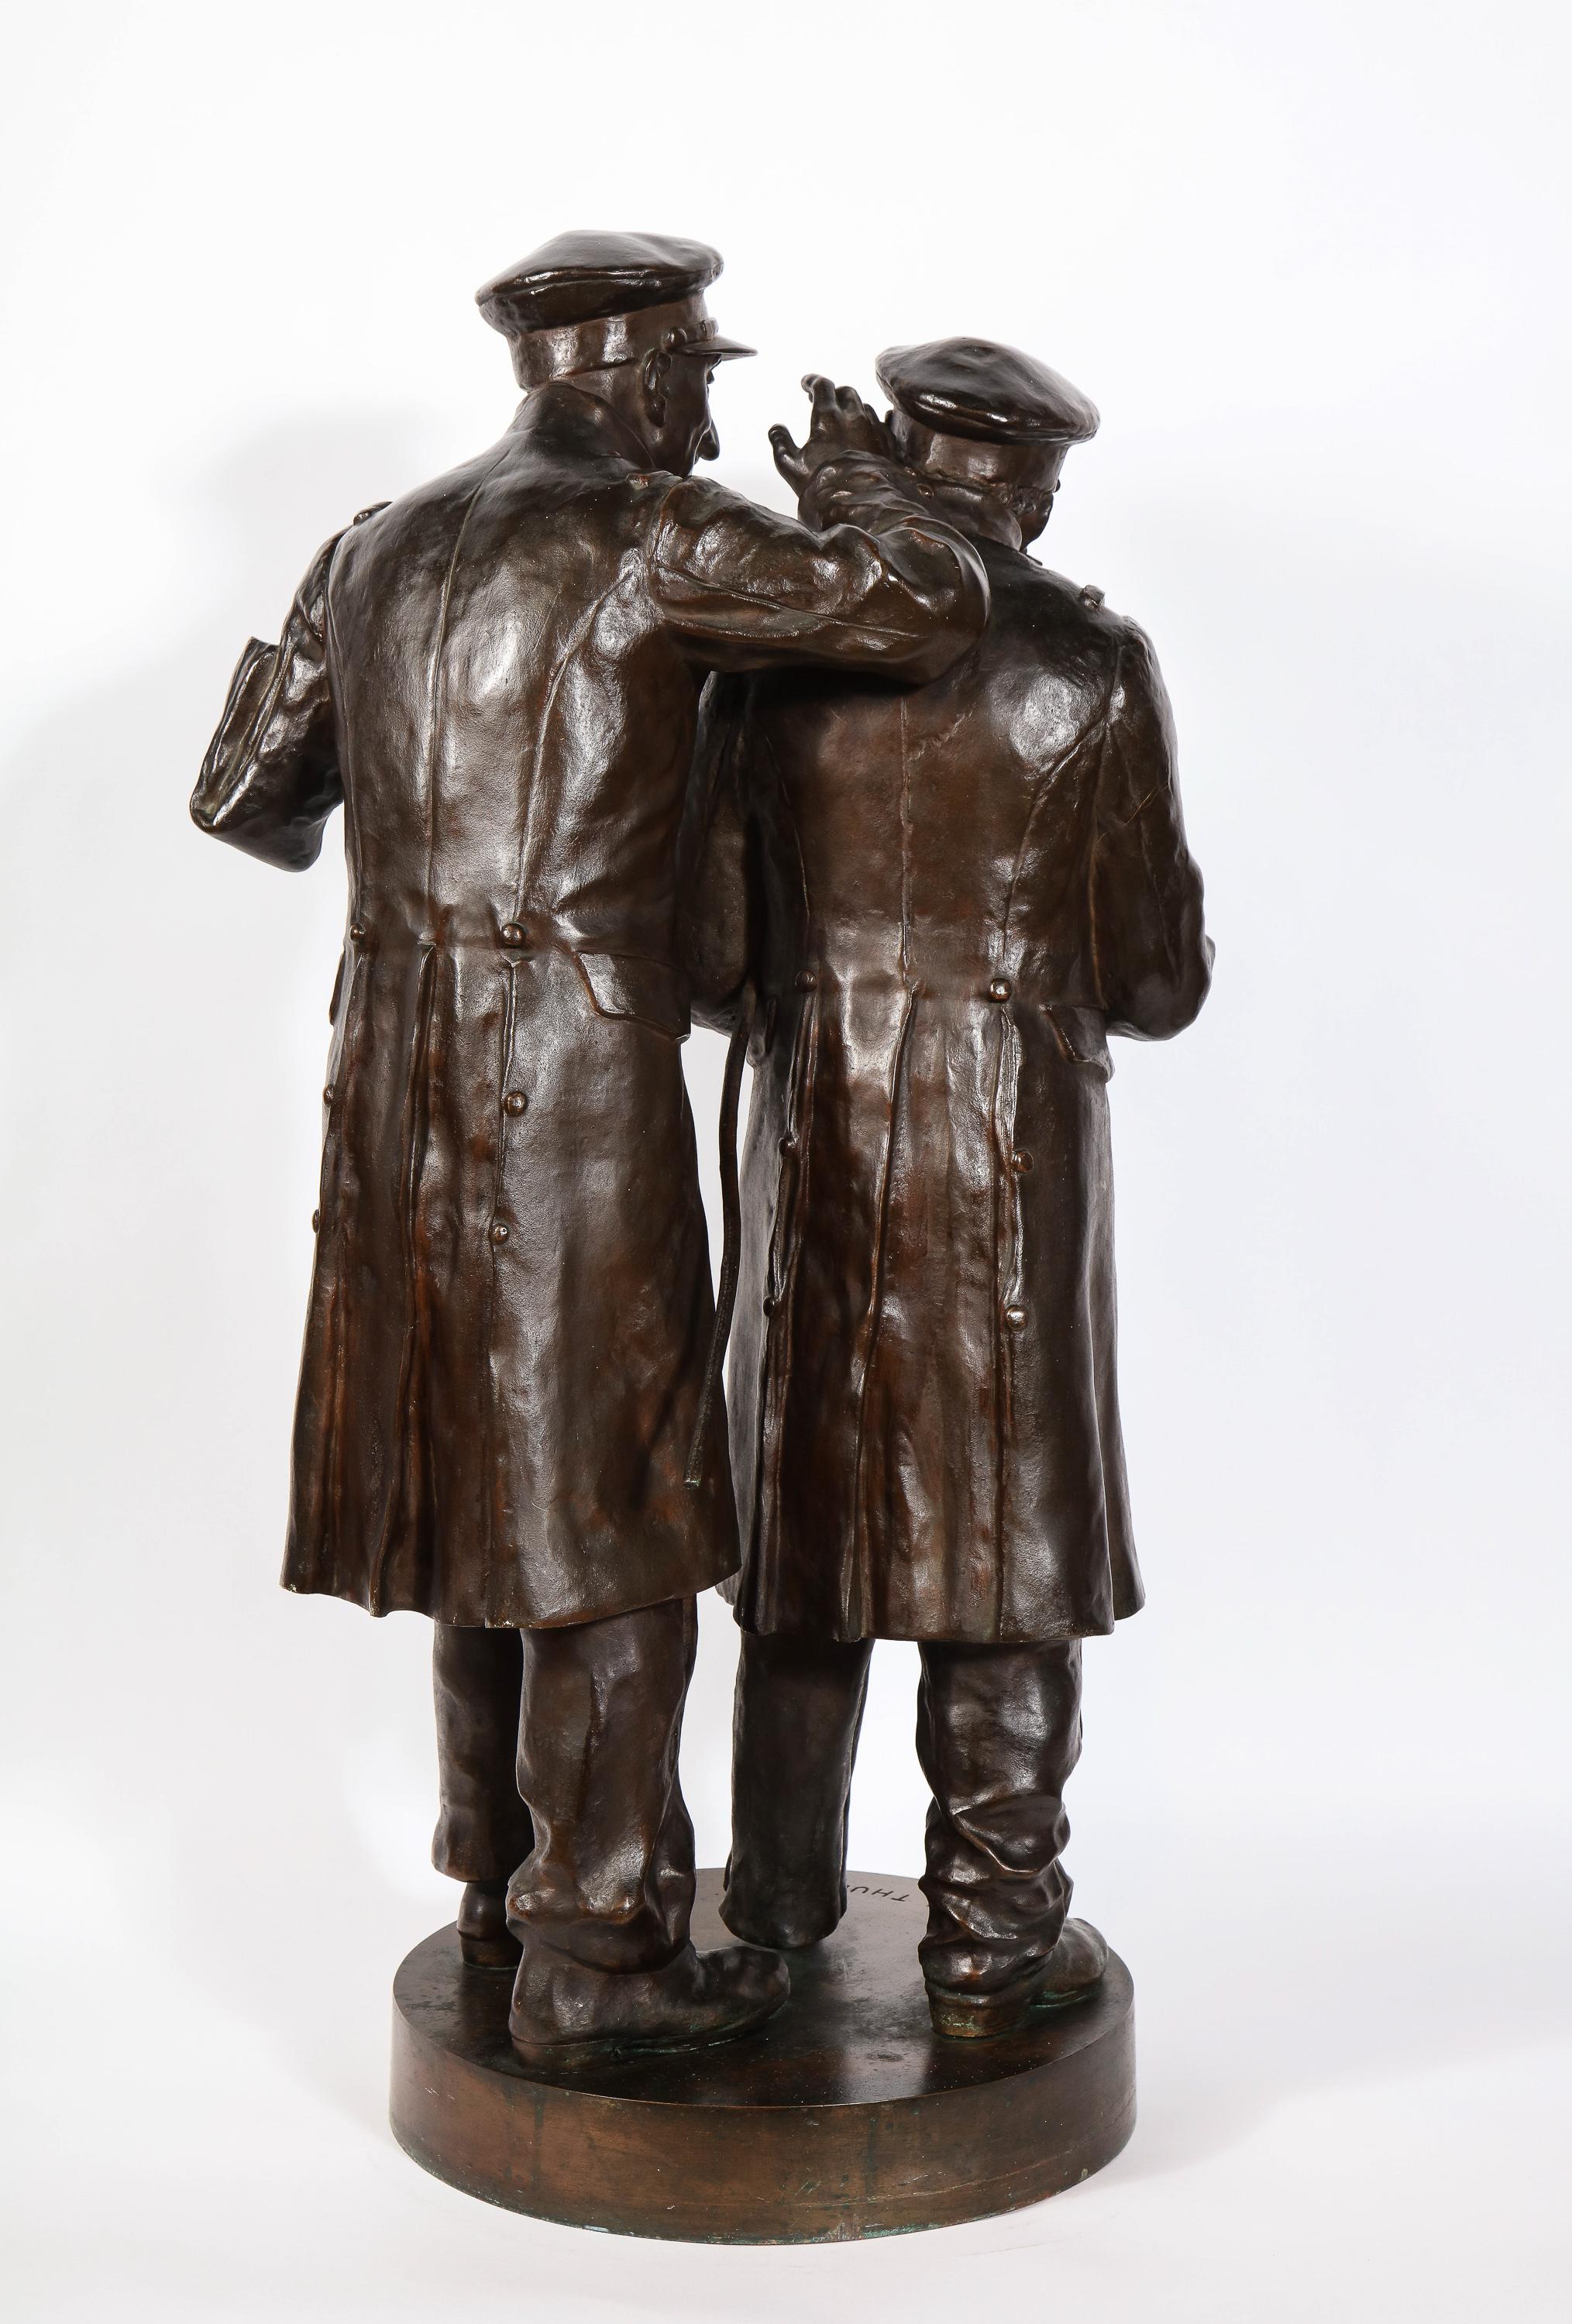 Paul Thubert 'English, 19th Century' a Large Bronze Sculpture of War Veterans For Sale 5